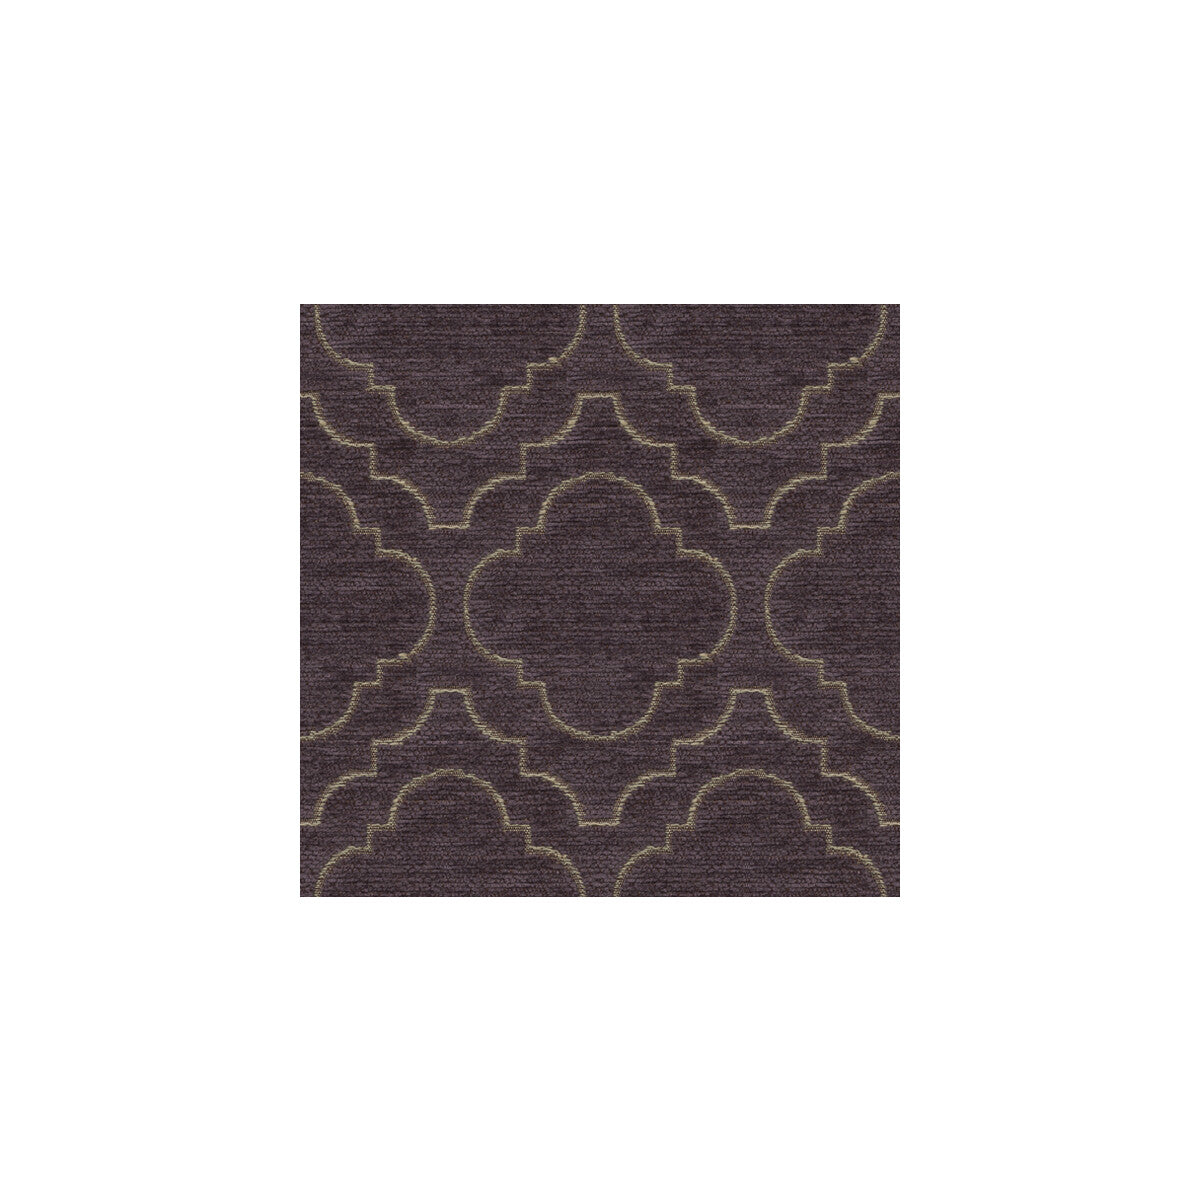 Kravet Design fabric in 31422-10 color - pattern 31422.10.0 - by Kravet Design in the Gis collection